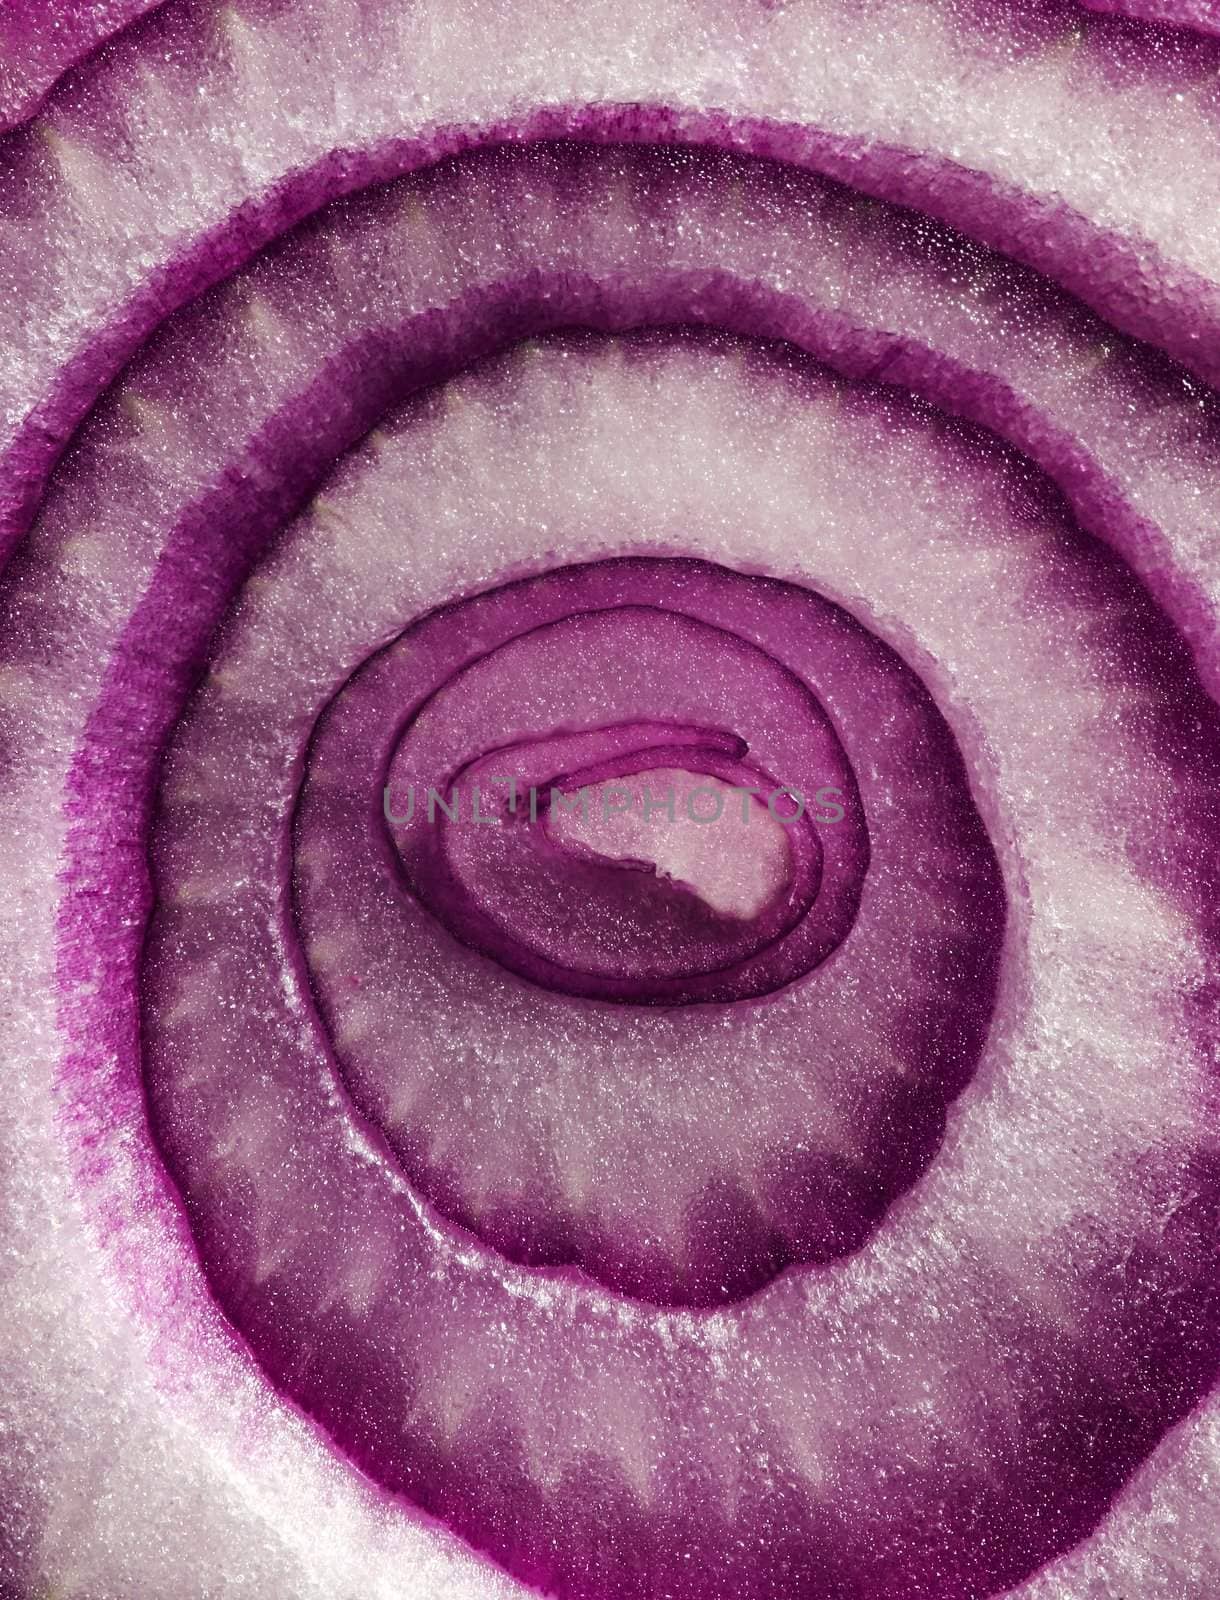 Extreme macro of a sliced purple onion